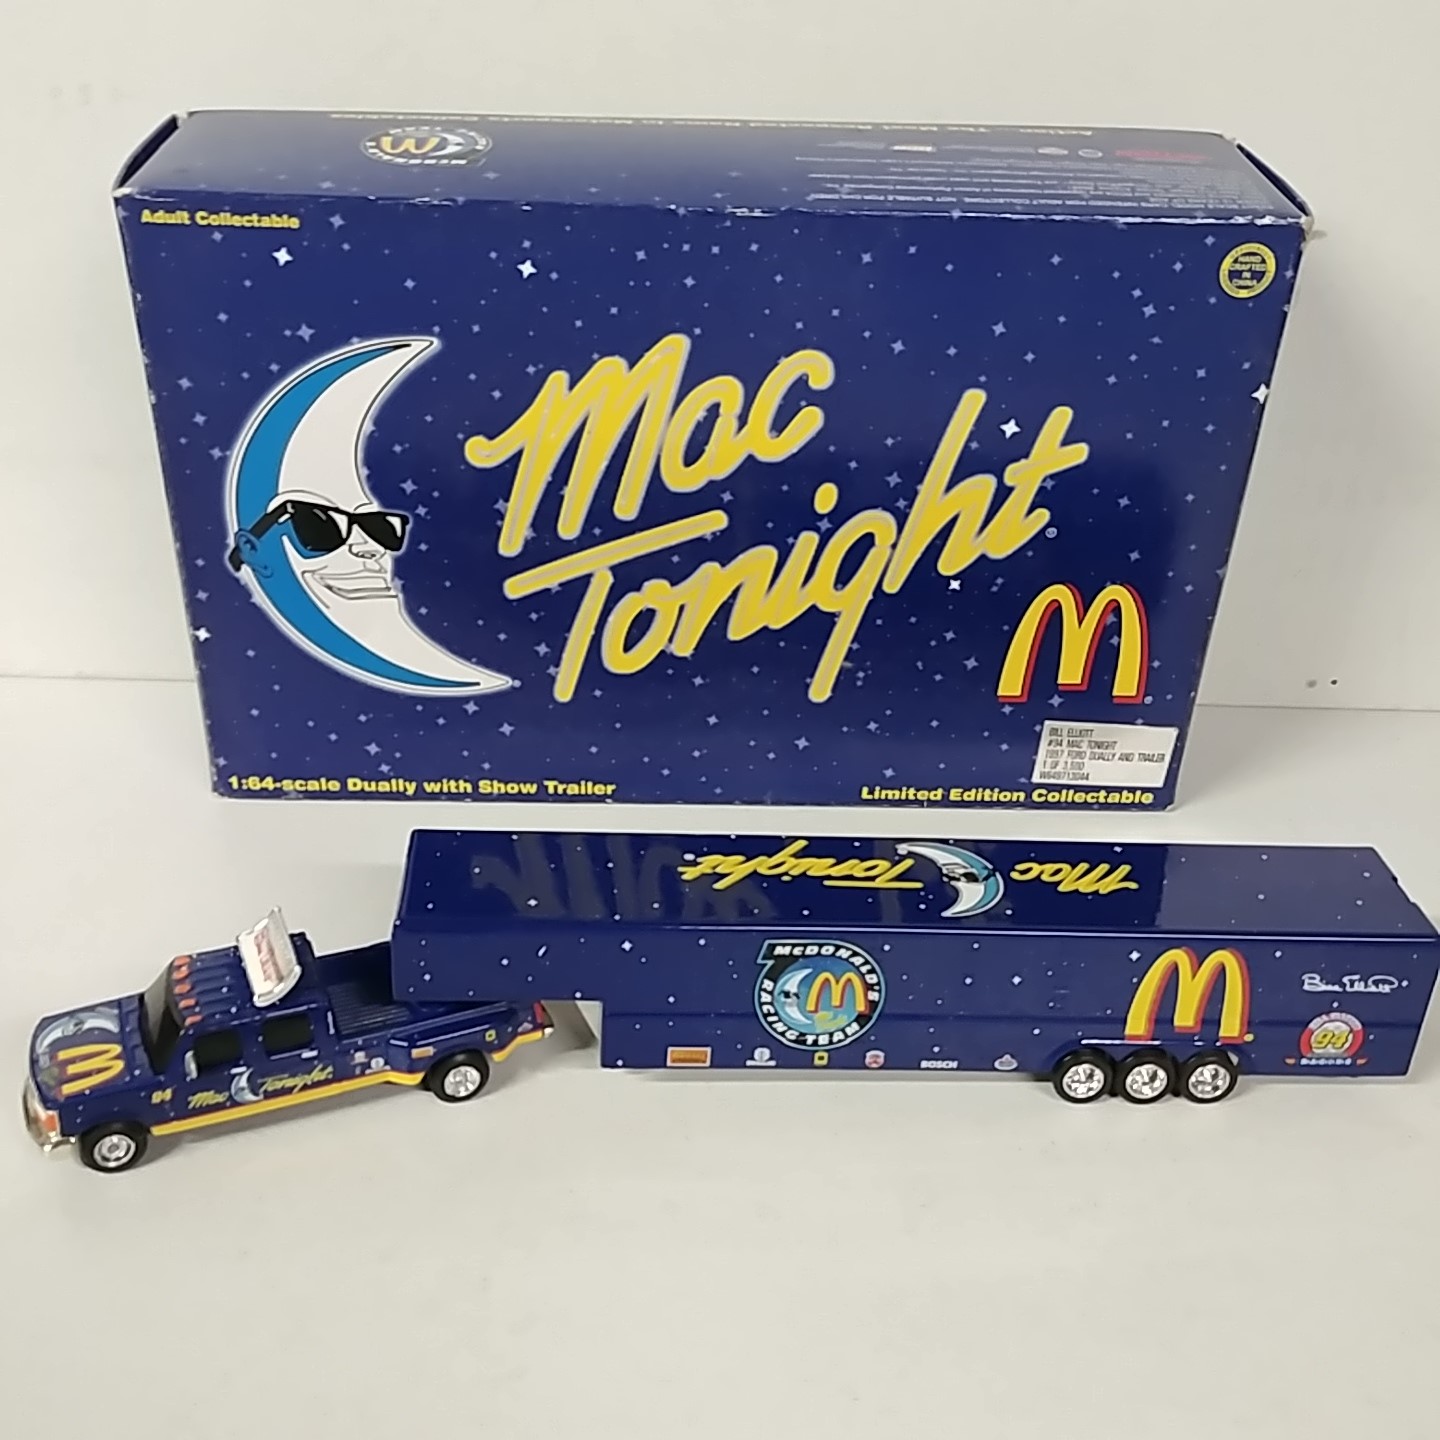 1997 Bill Elliott 1/64th McDonald's "Mac Tonight" dually with trailer